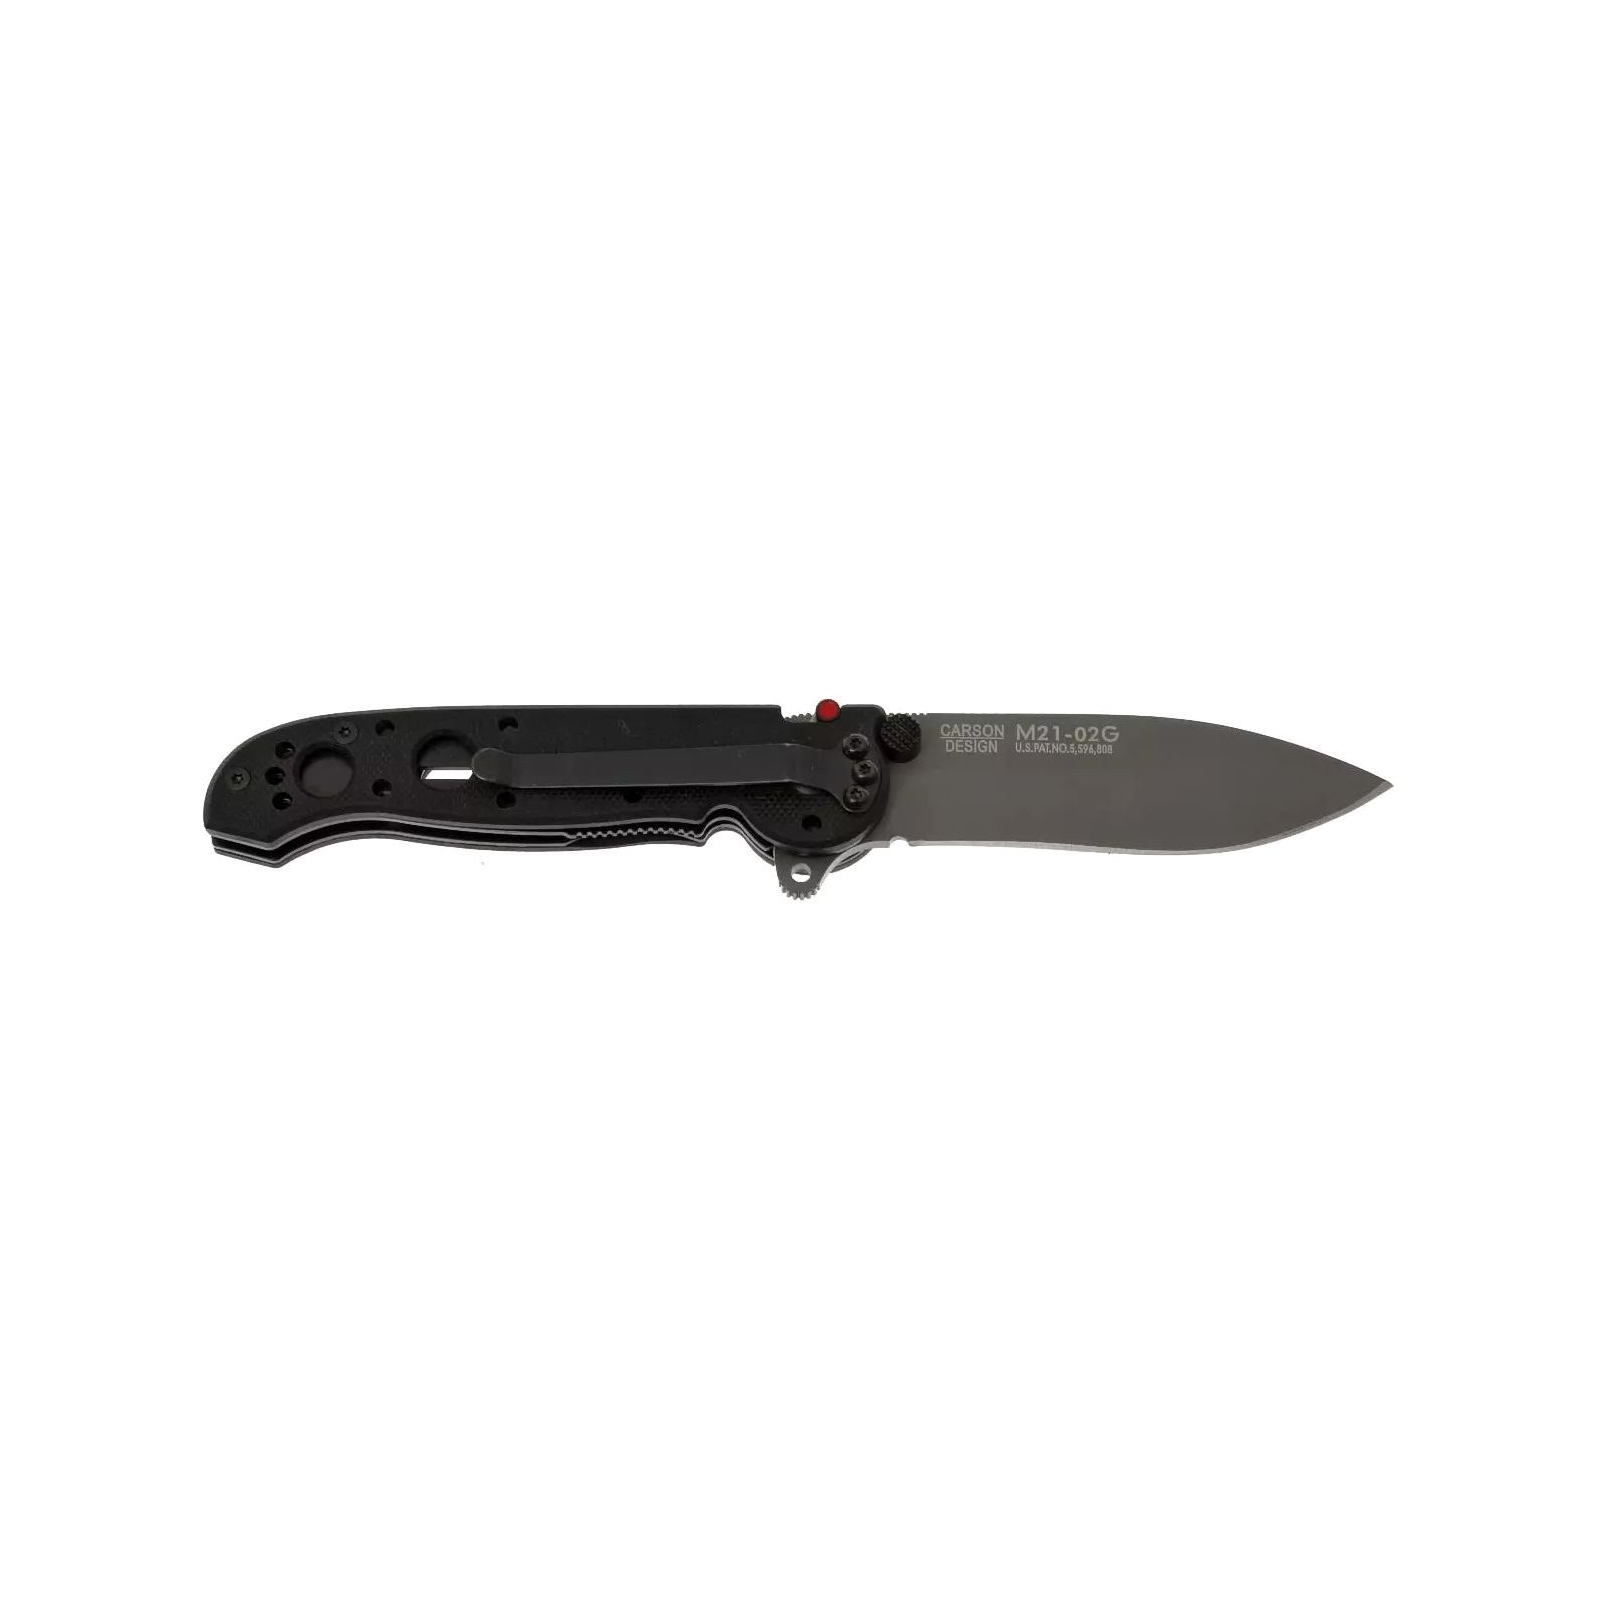 Нож CRKT M21 Carson Folder Black (M21-02G) изображение 2